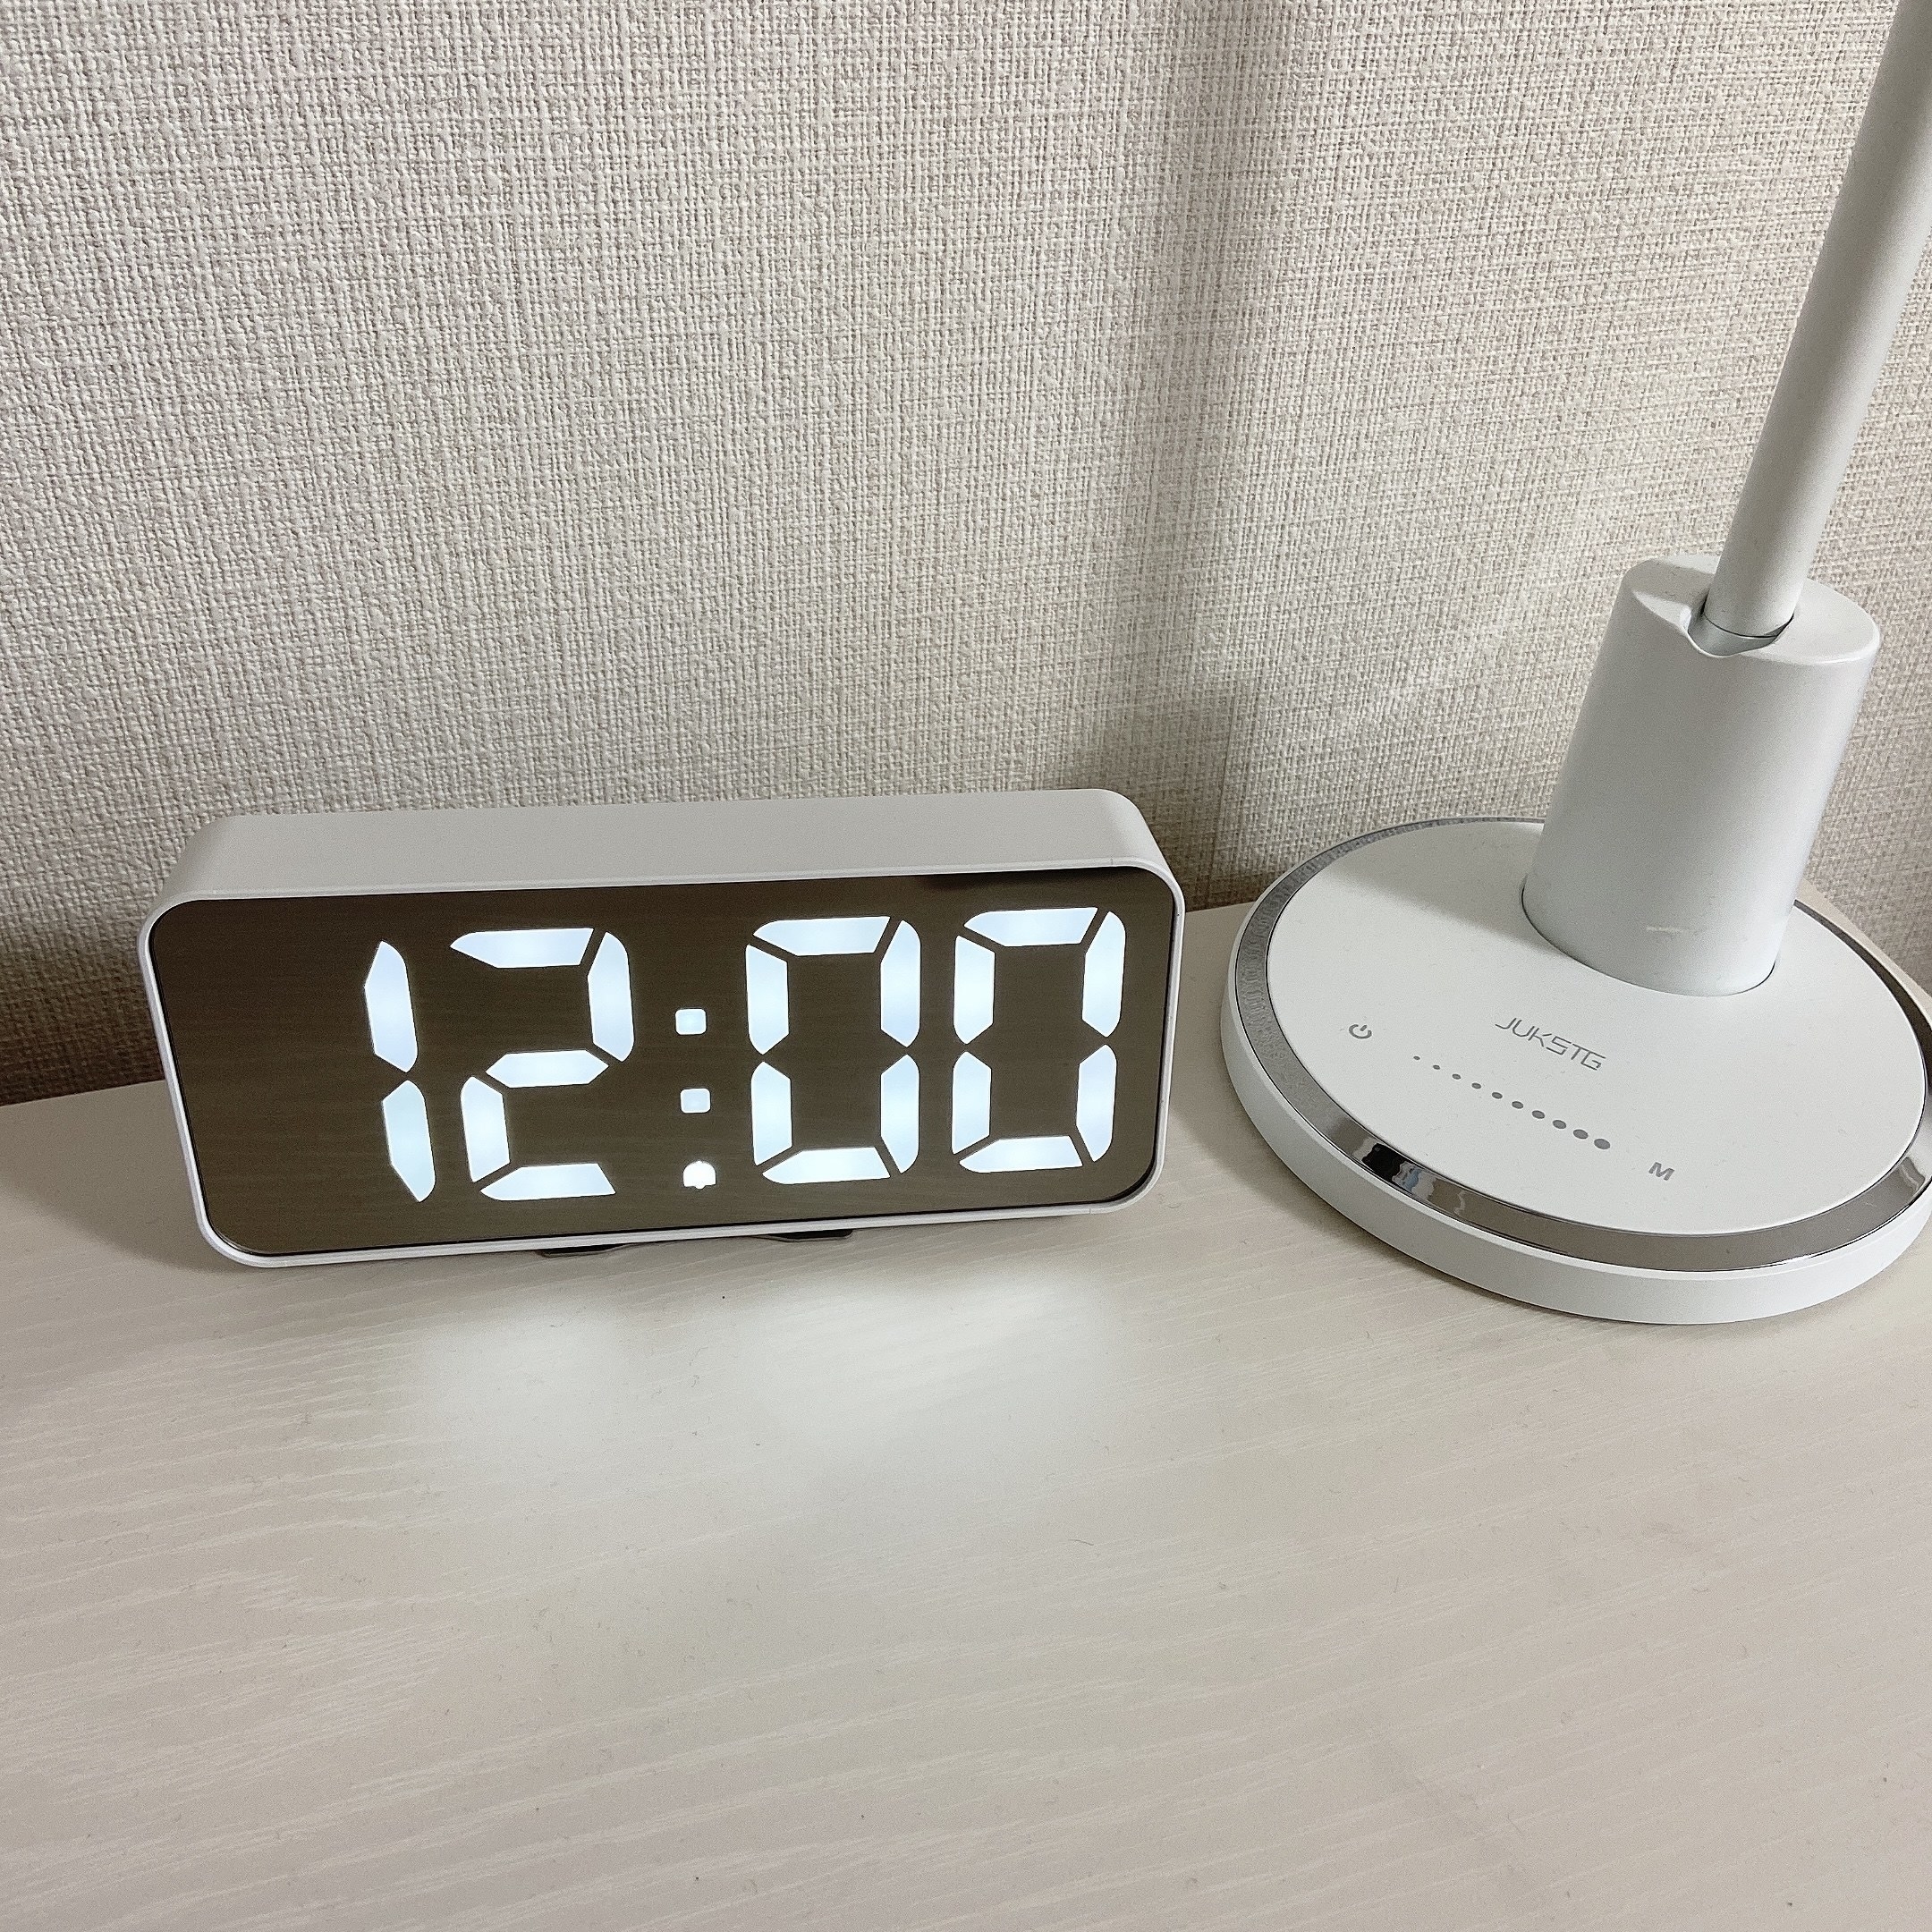 IKEA イケア NOLLÅTTA ノルオッタ 目覚まし時計 - インテリア時計